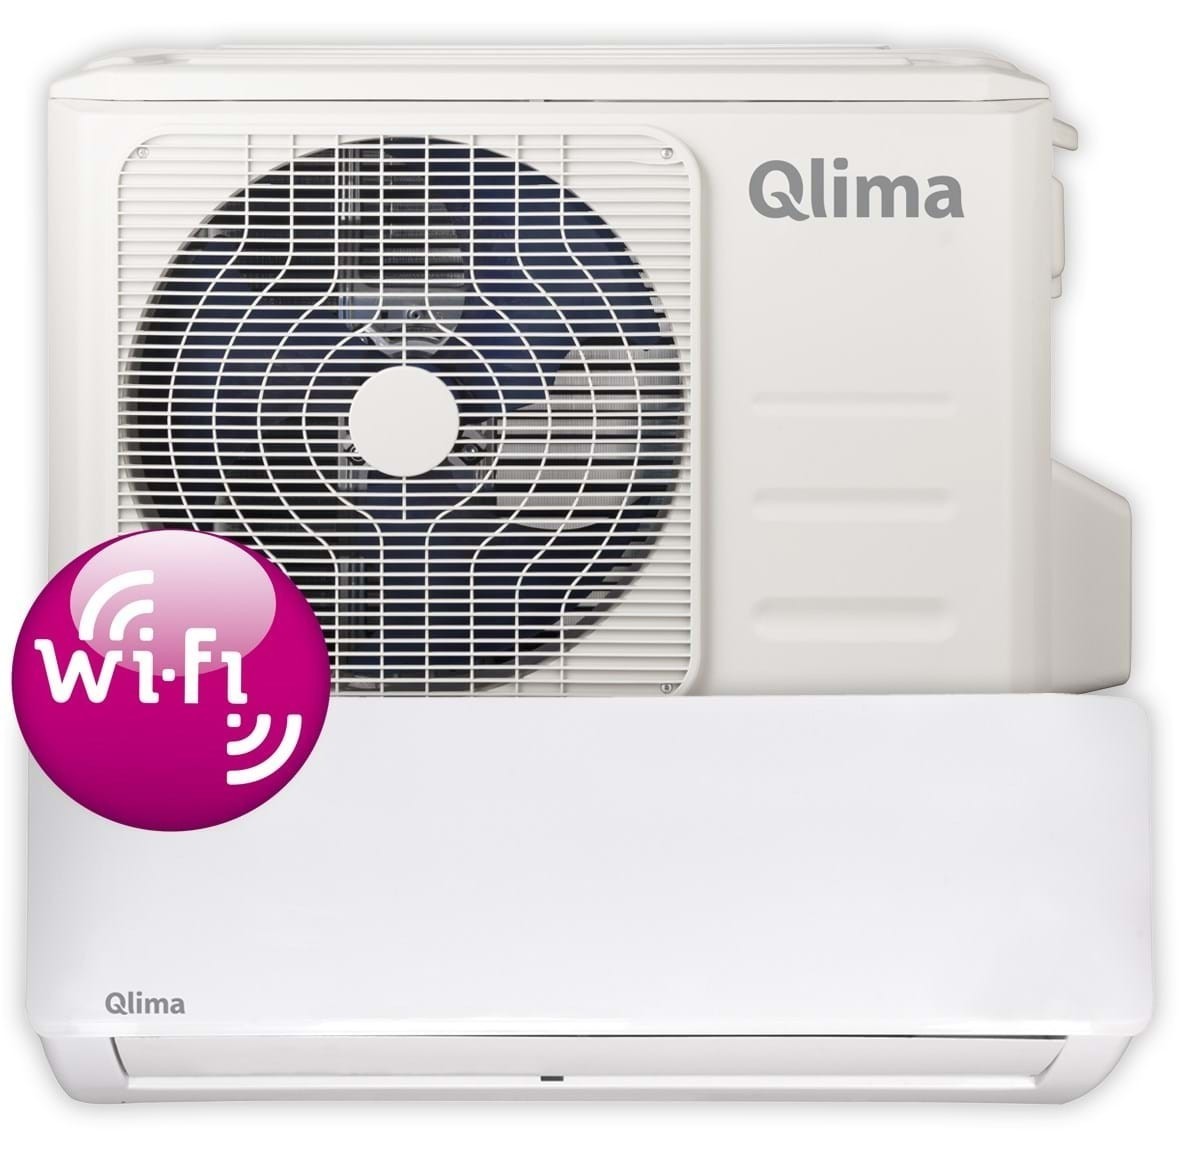 Qlima SC5232 Split Airco WiFi Compleet | Wandmodel Airconditioner | Airco en Verwarming